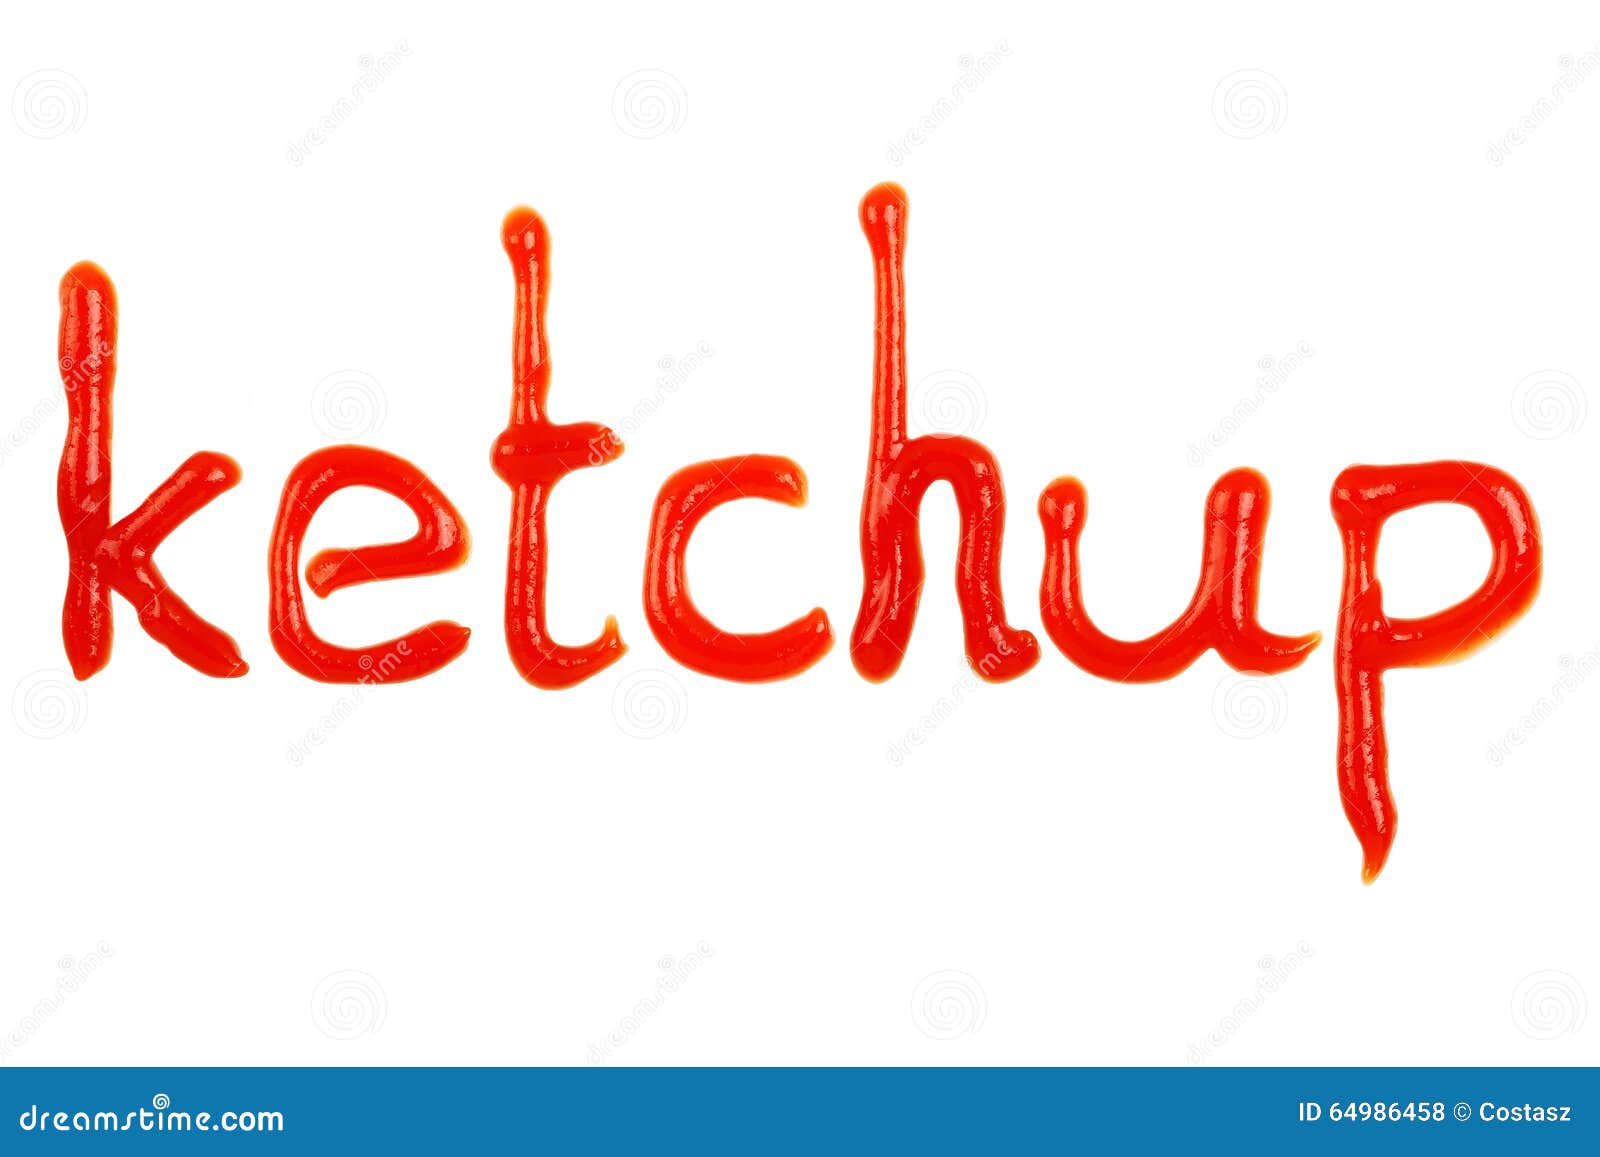 Кетчуп на английском. Надпись кетчупом. Кетчуп слово. Красивая надпись кетчуп. Кетчуп слово надпись.